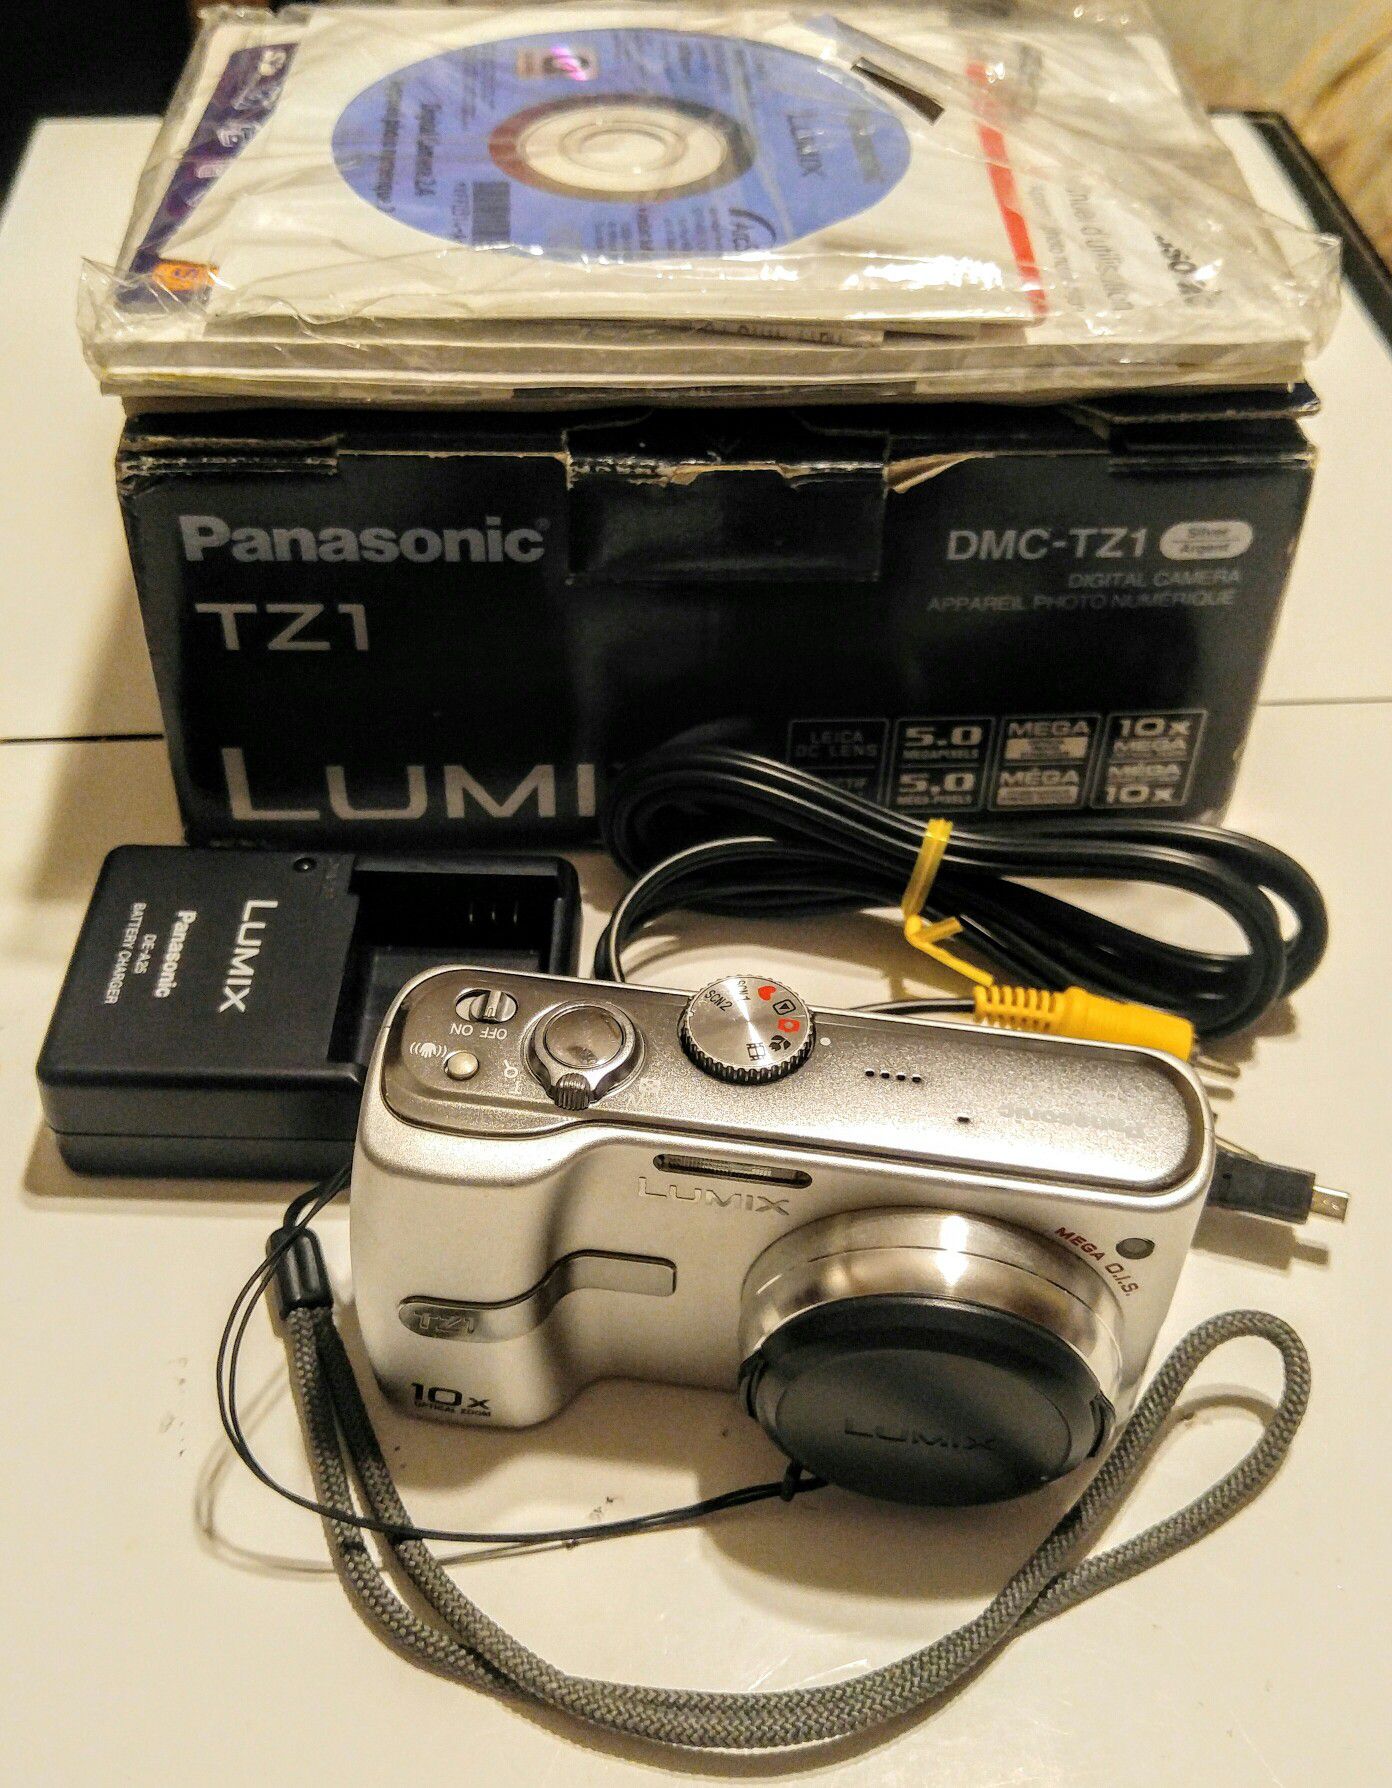 Panasonic Lumix 5.0 MP Digital Camera